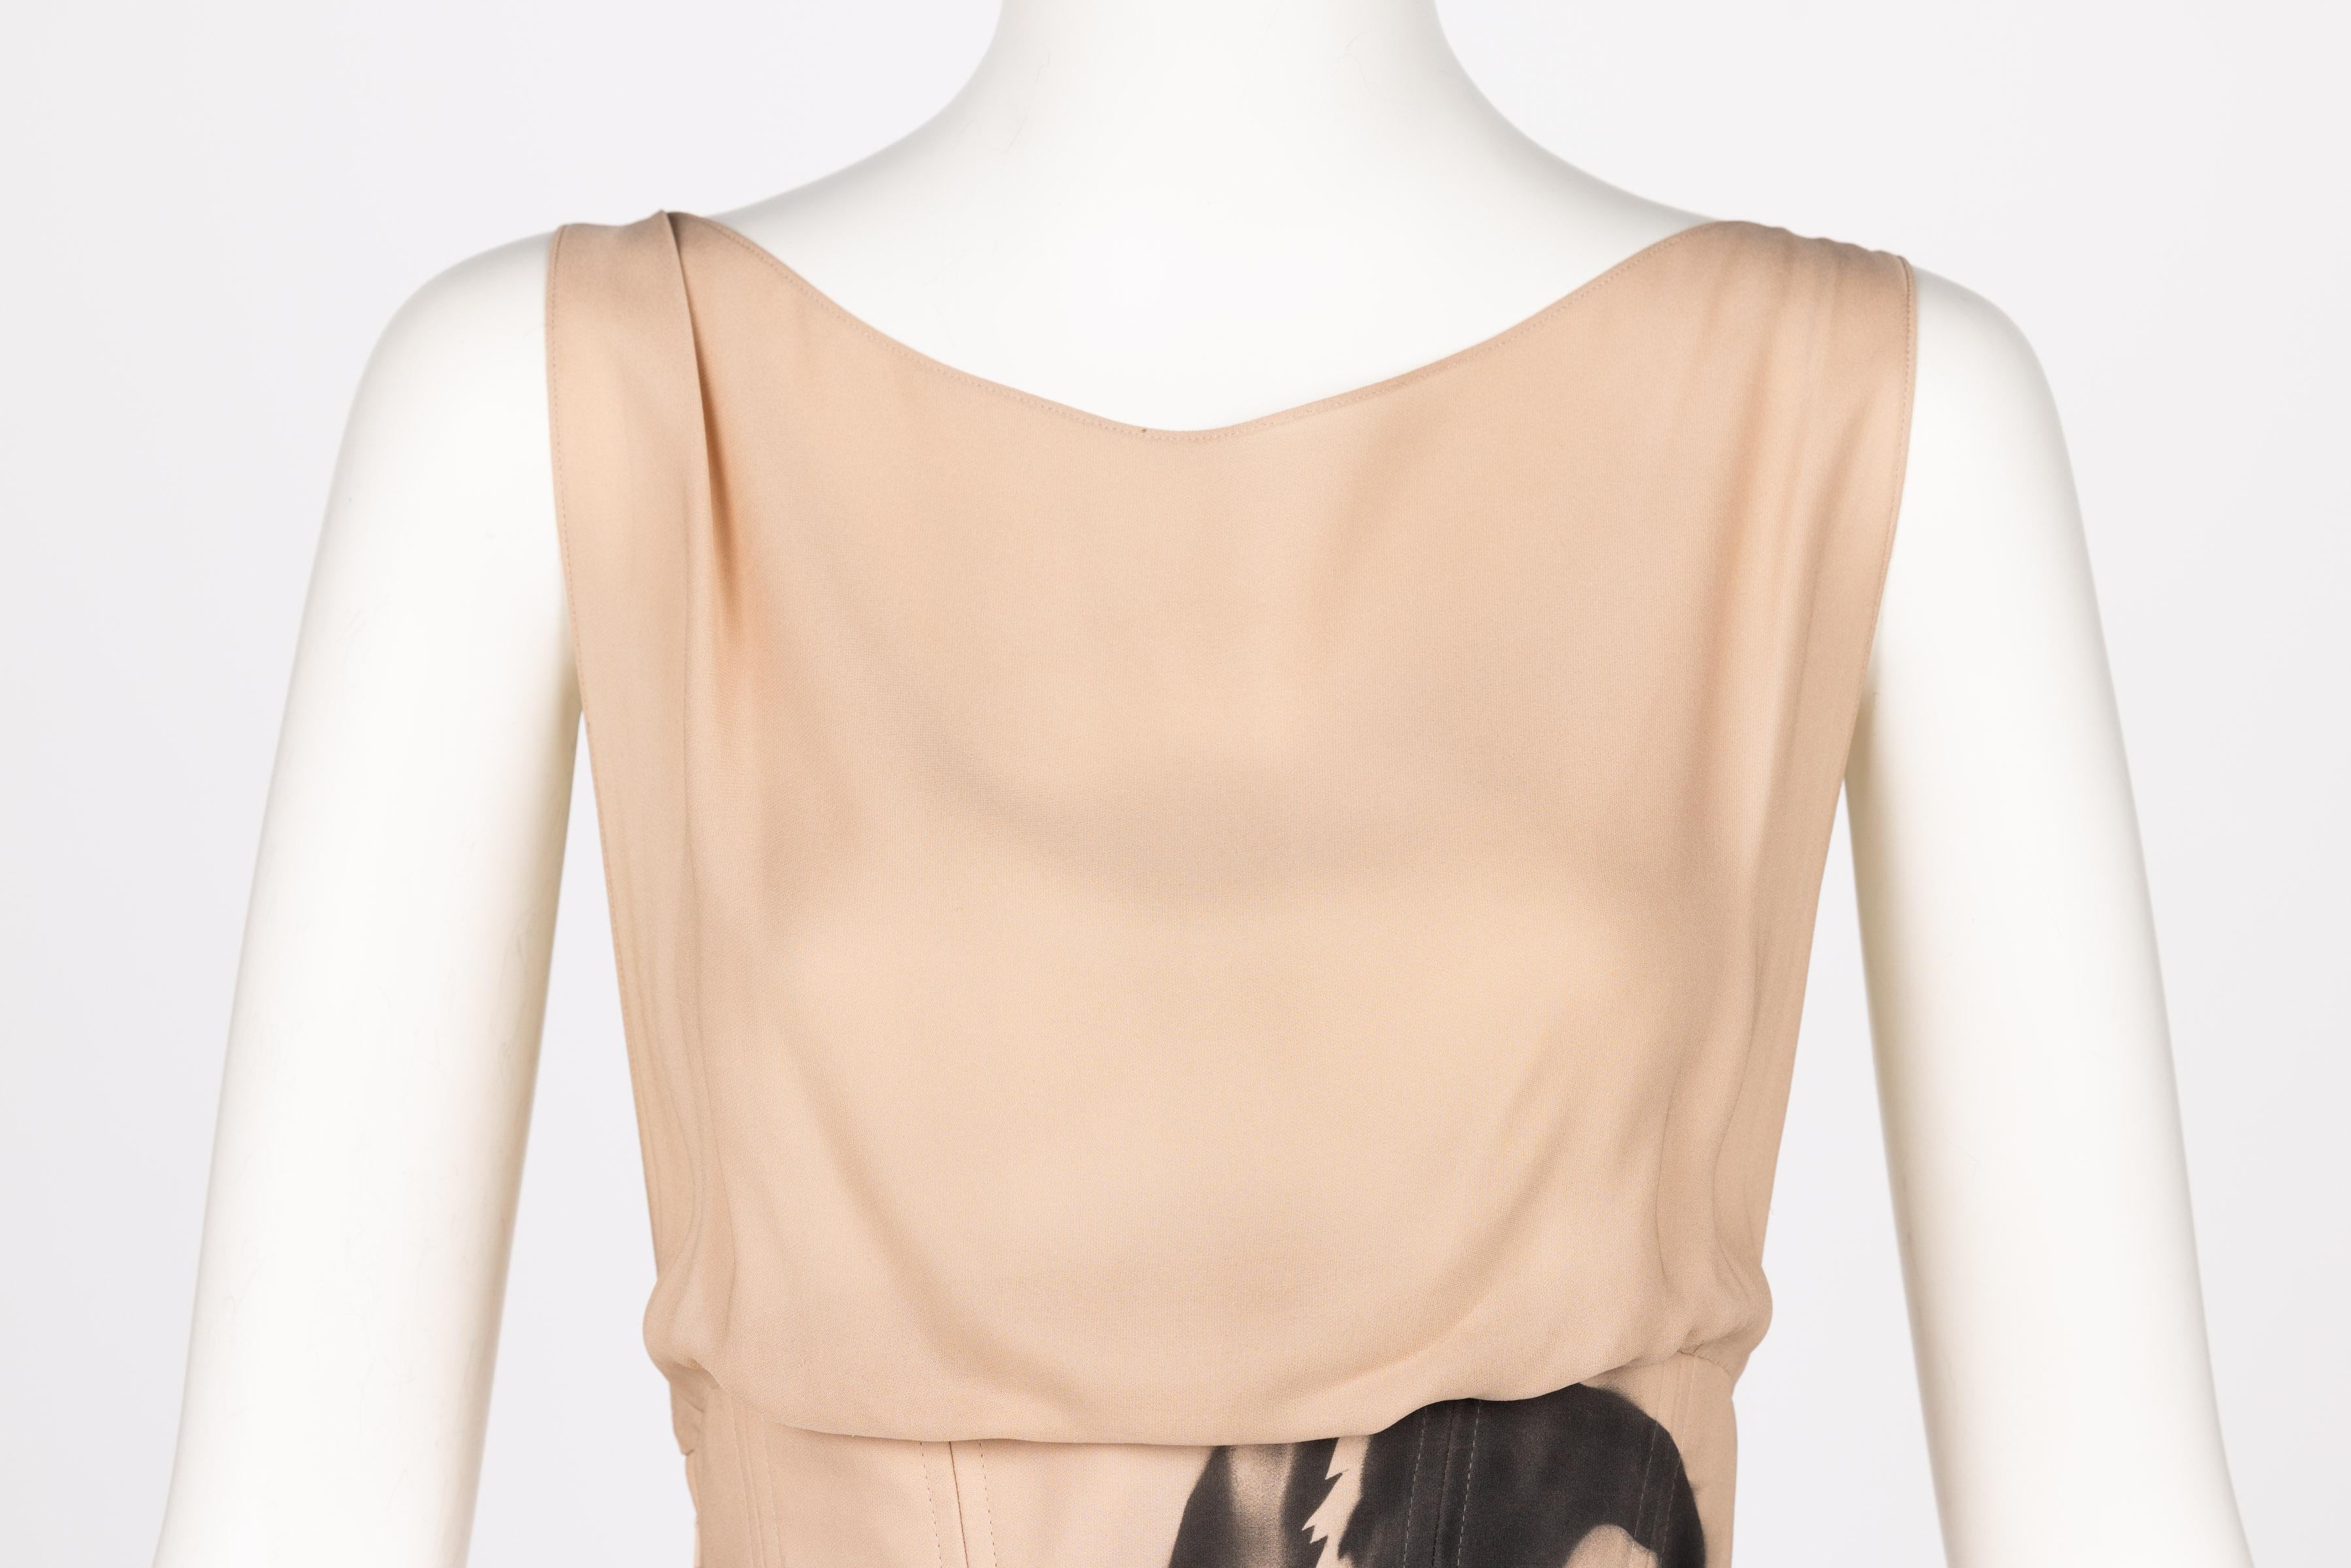 Chloé Stella McCartney F/W 2001 Draped Silk Face Corset Dress For Sale 2